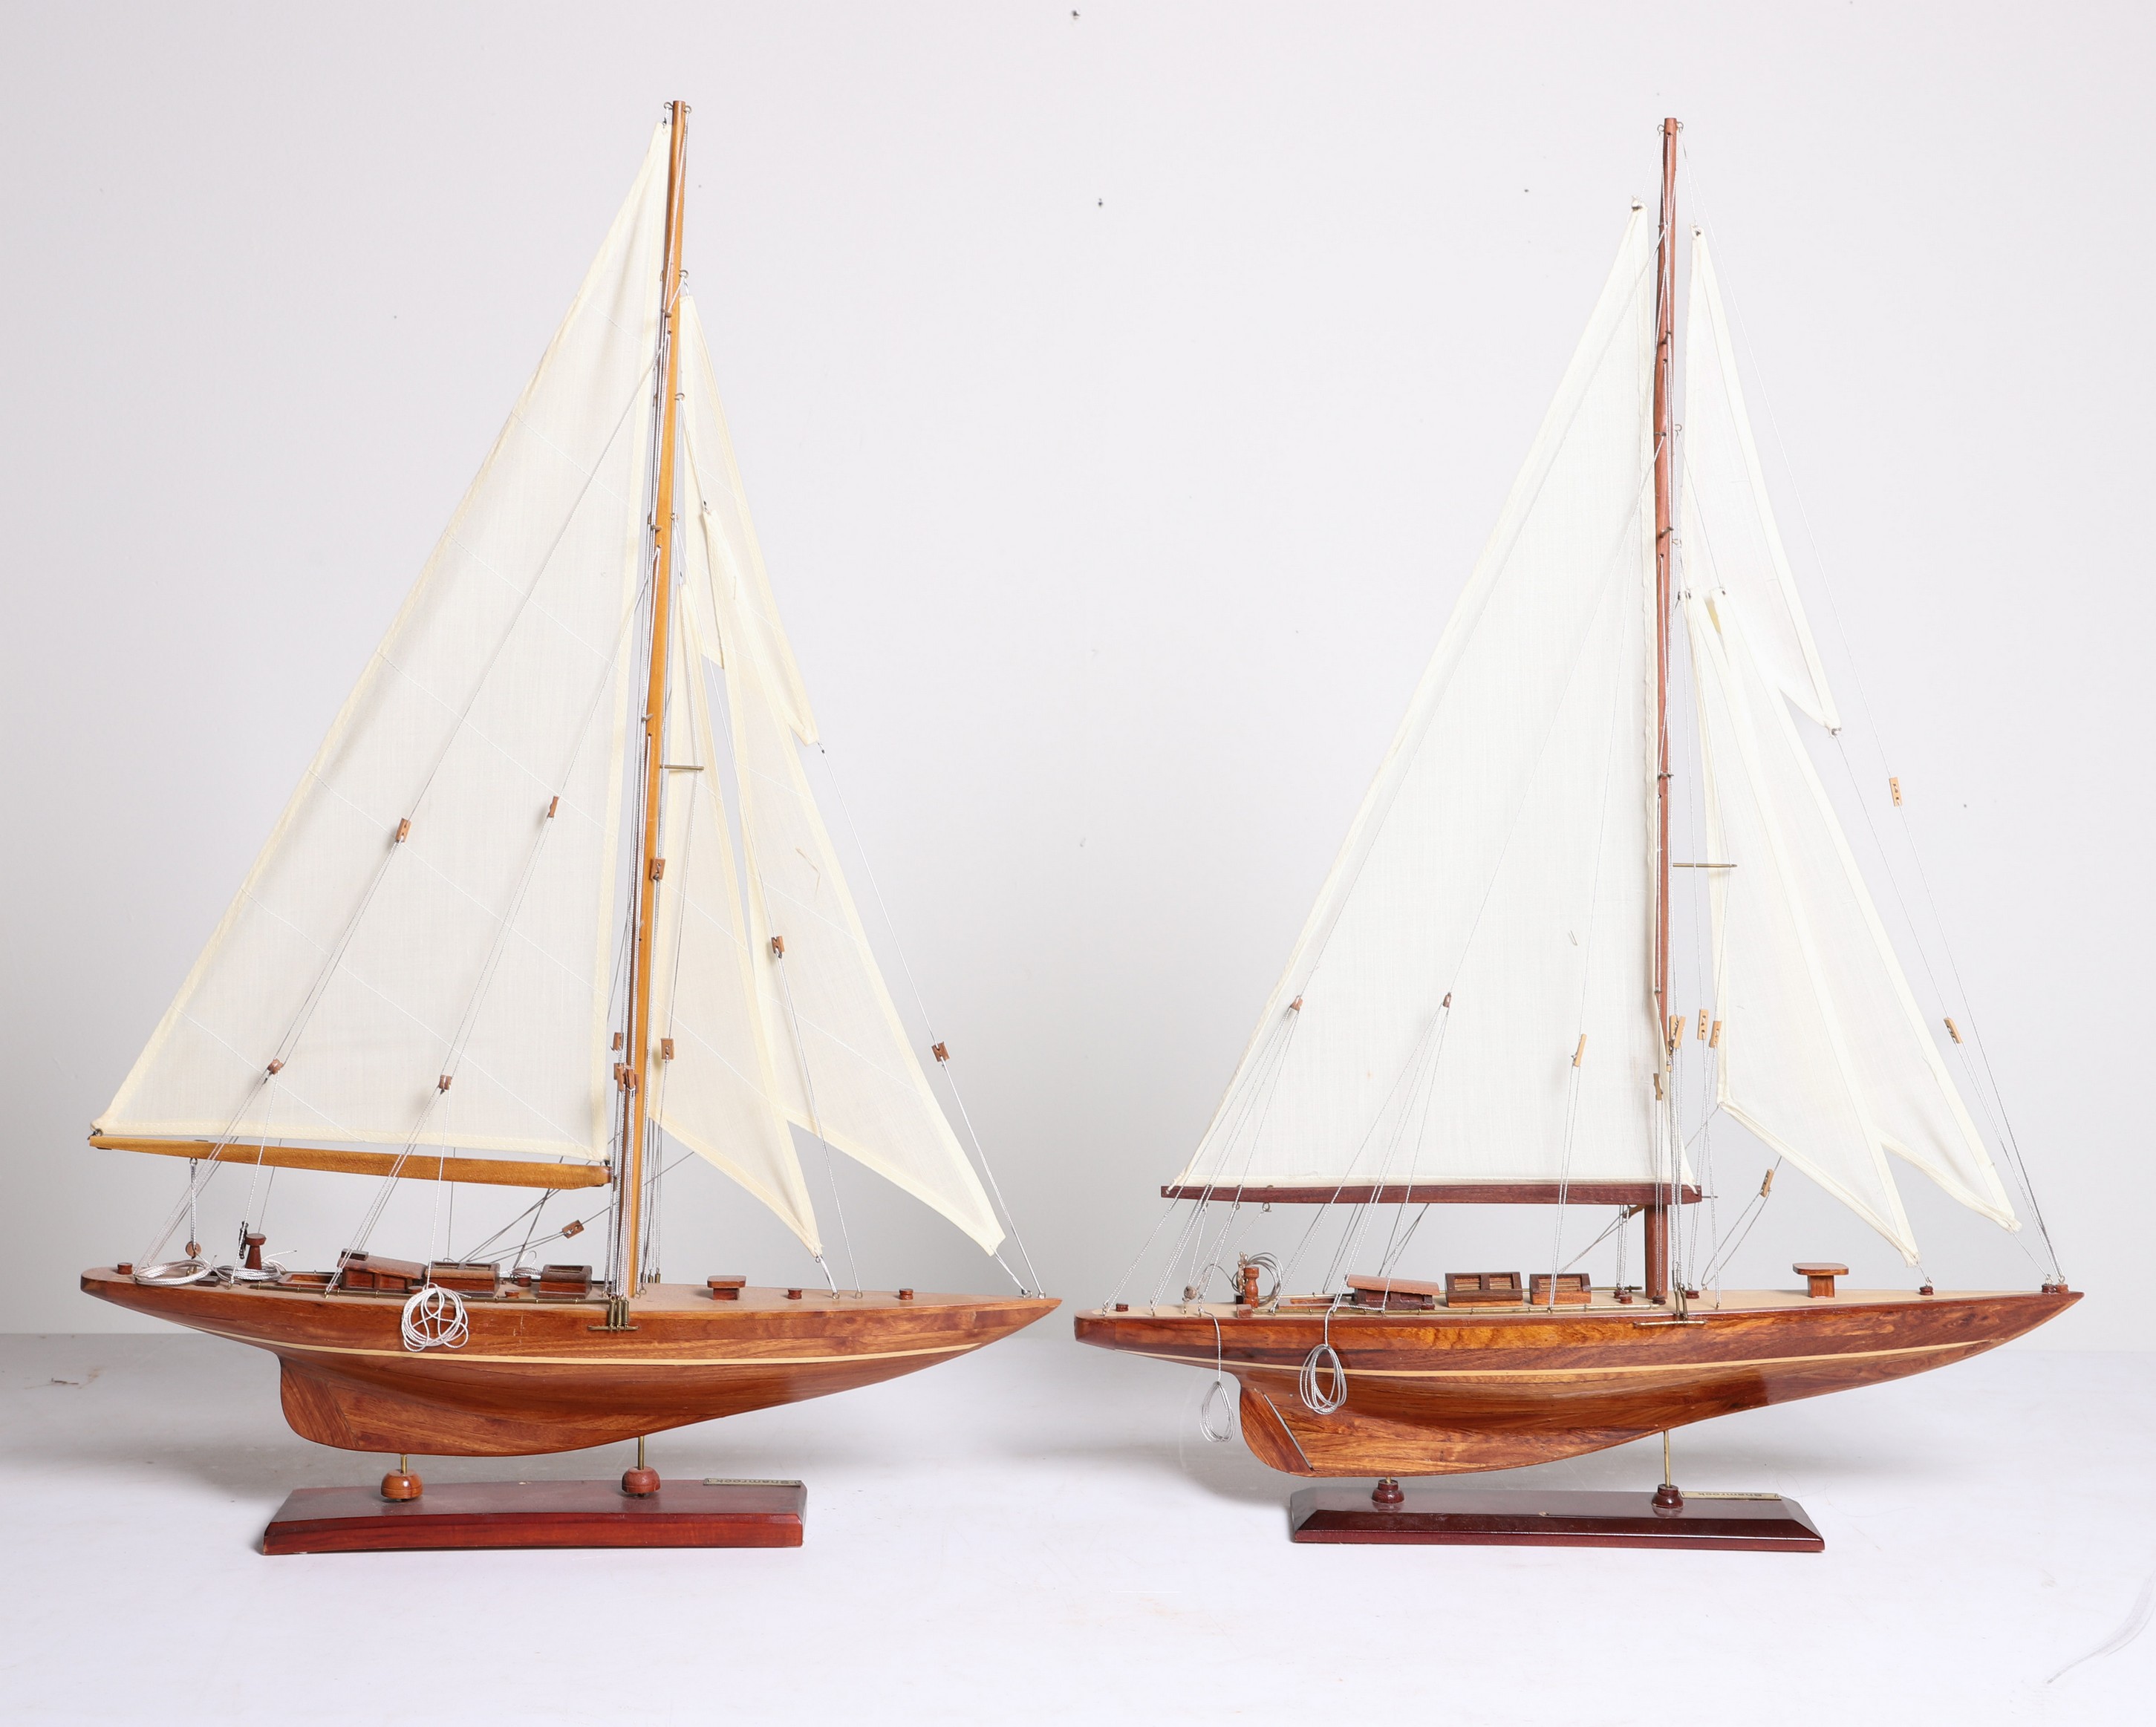 (2) Model sailboats, "Shamrock",